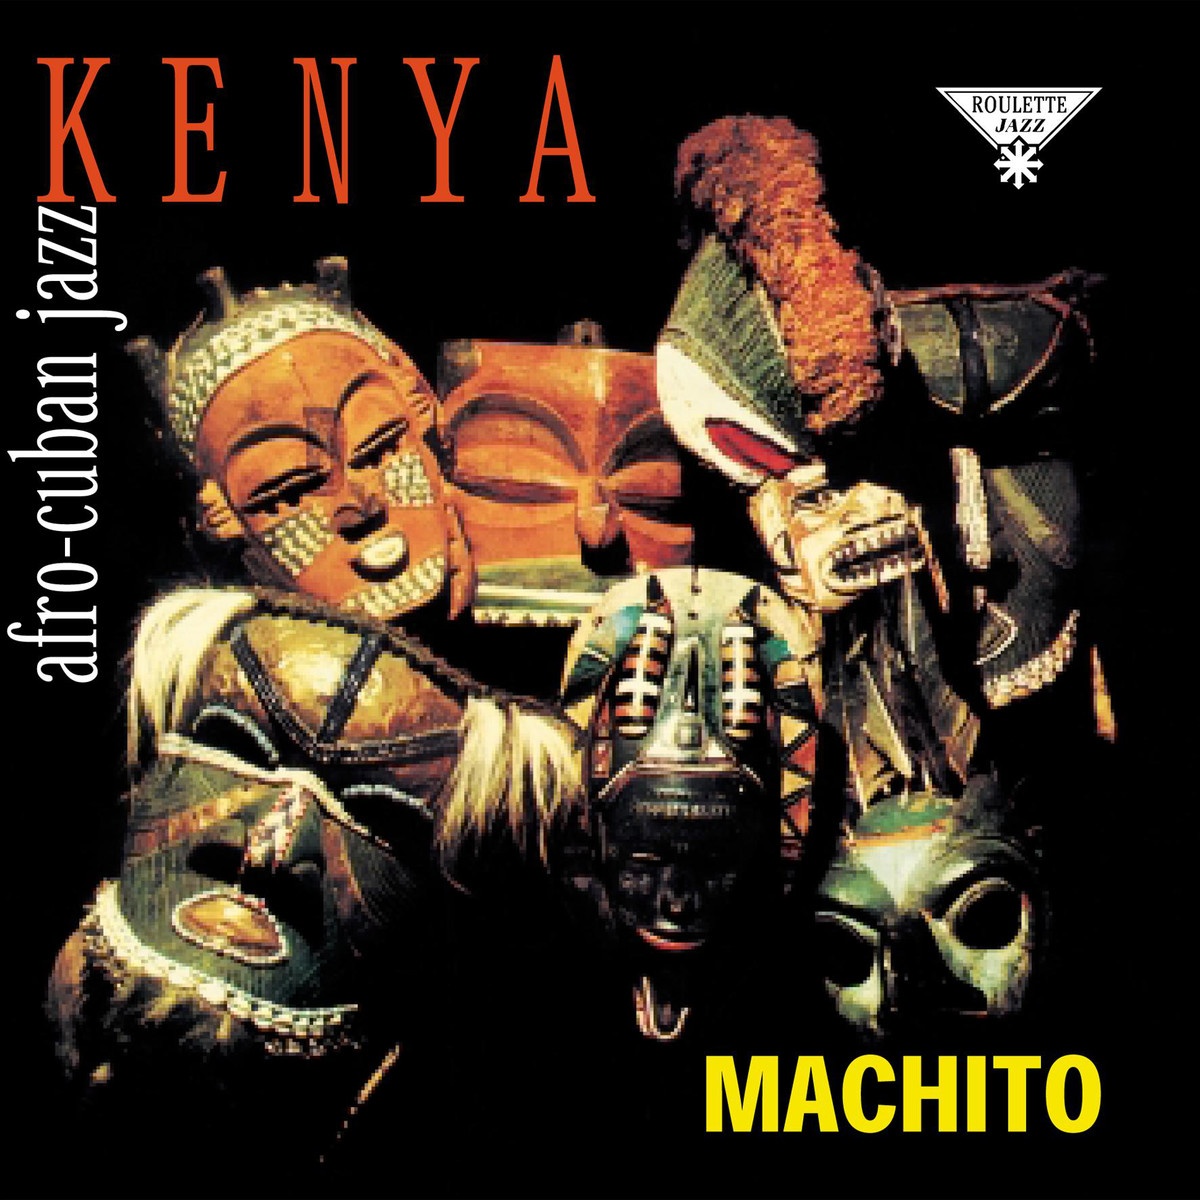 Kenya (2000 Digital Remaster)